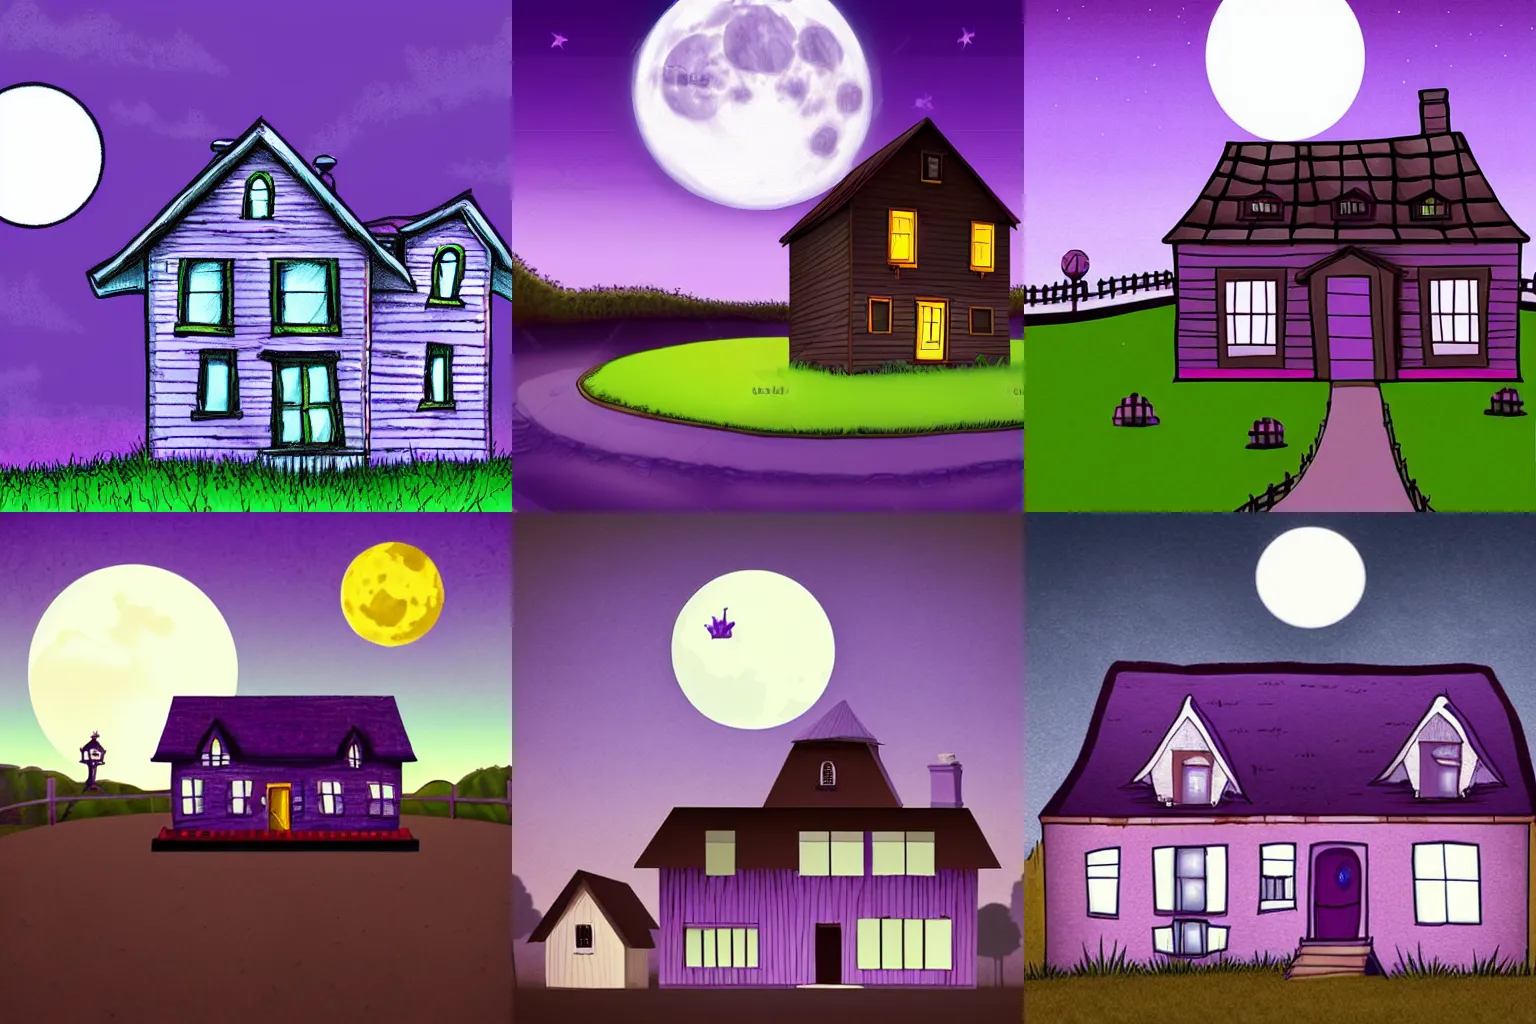 Prompt: A creepy house under a full moon | Cartoon art style | Brown house | Purple sky